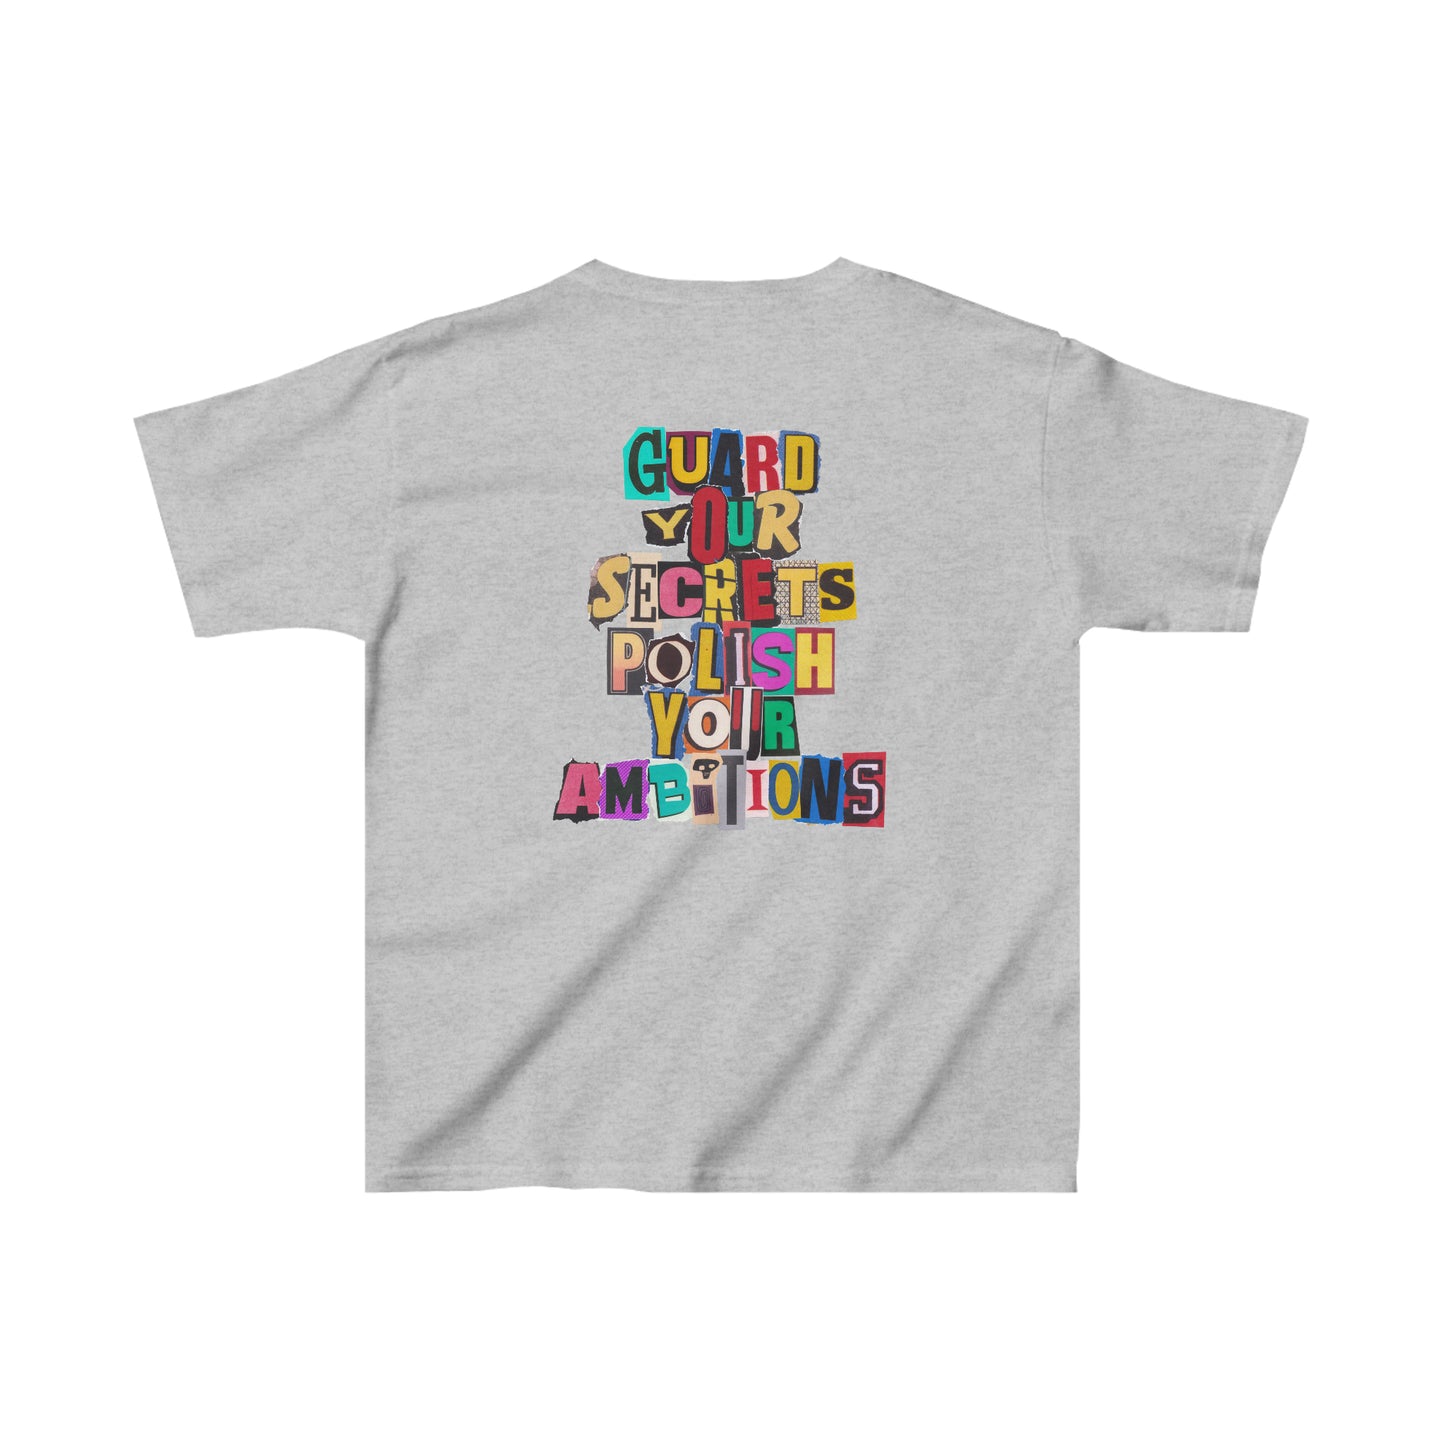 Youth WIY x A Jones Vintage T-Shirt